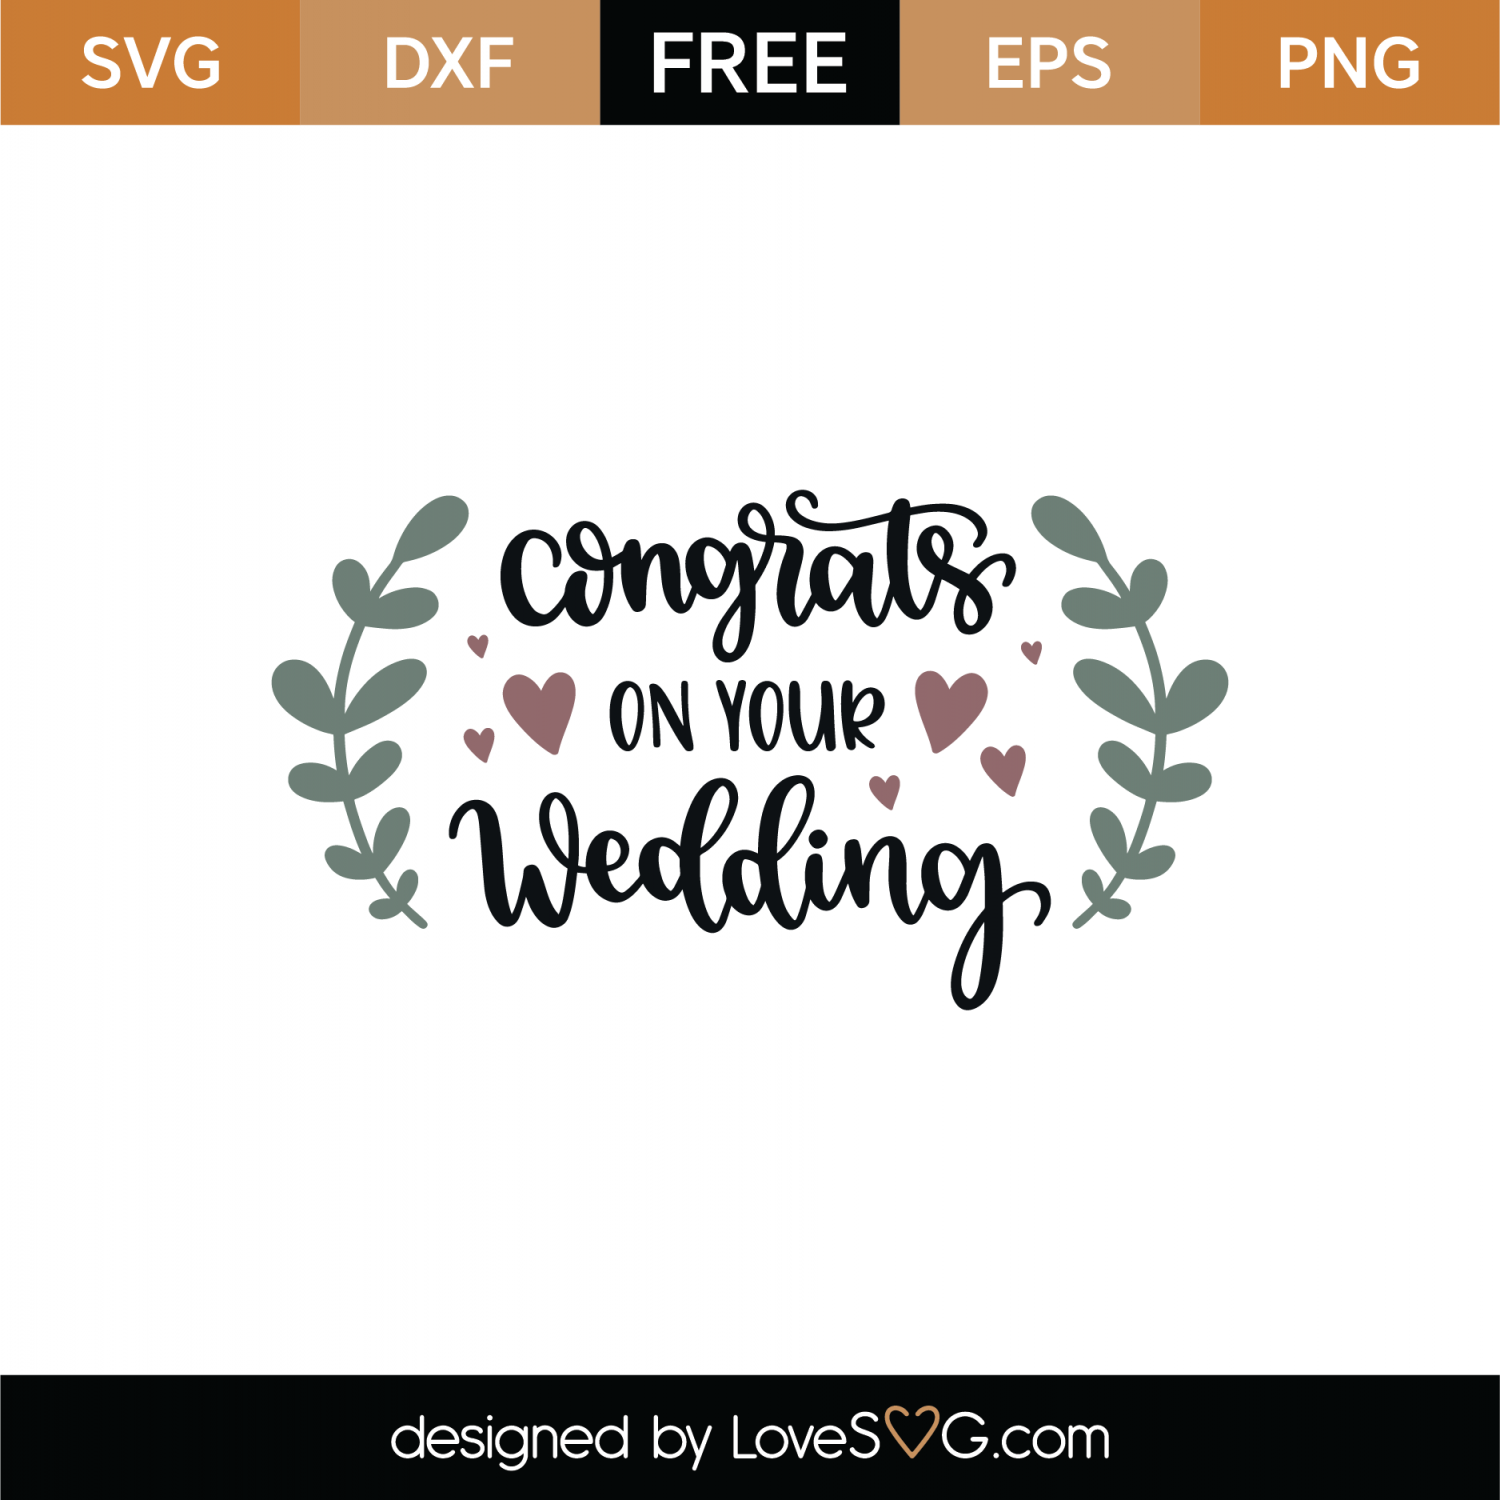 Free Congrats On Your Wedding SVG Cut File | Lovesvg.com